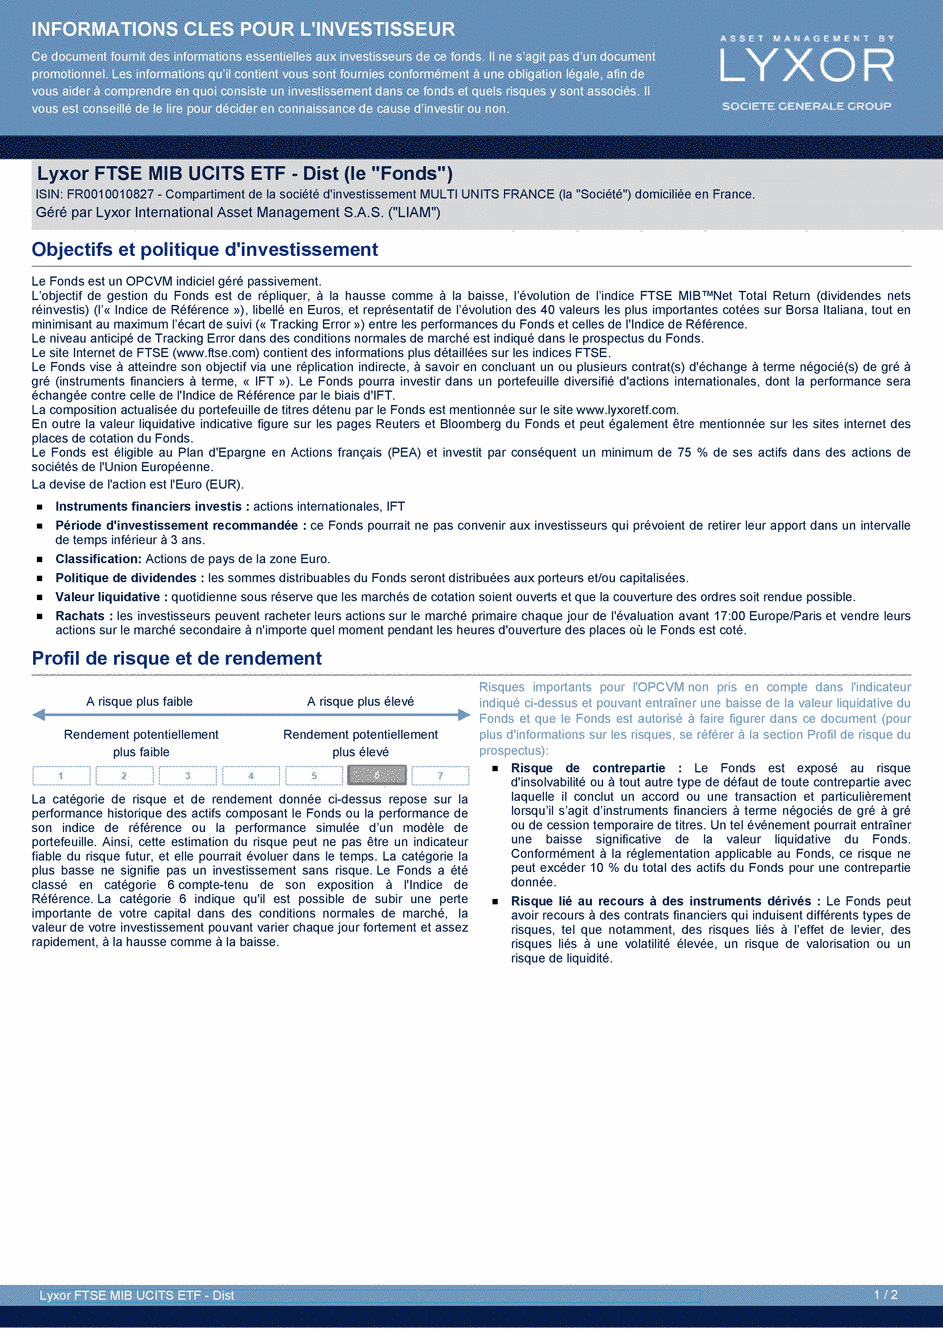 DICI Lyxor FTSE MIB UCITS ETF - Dist - 19/02/2021 - French